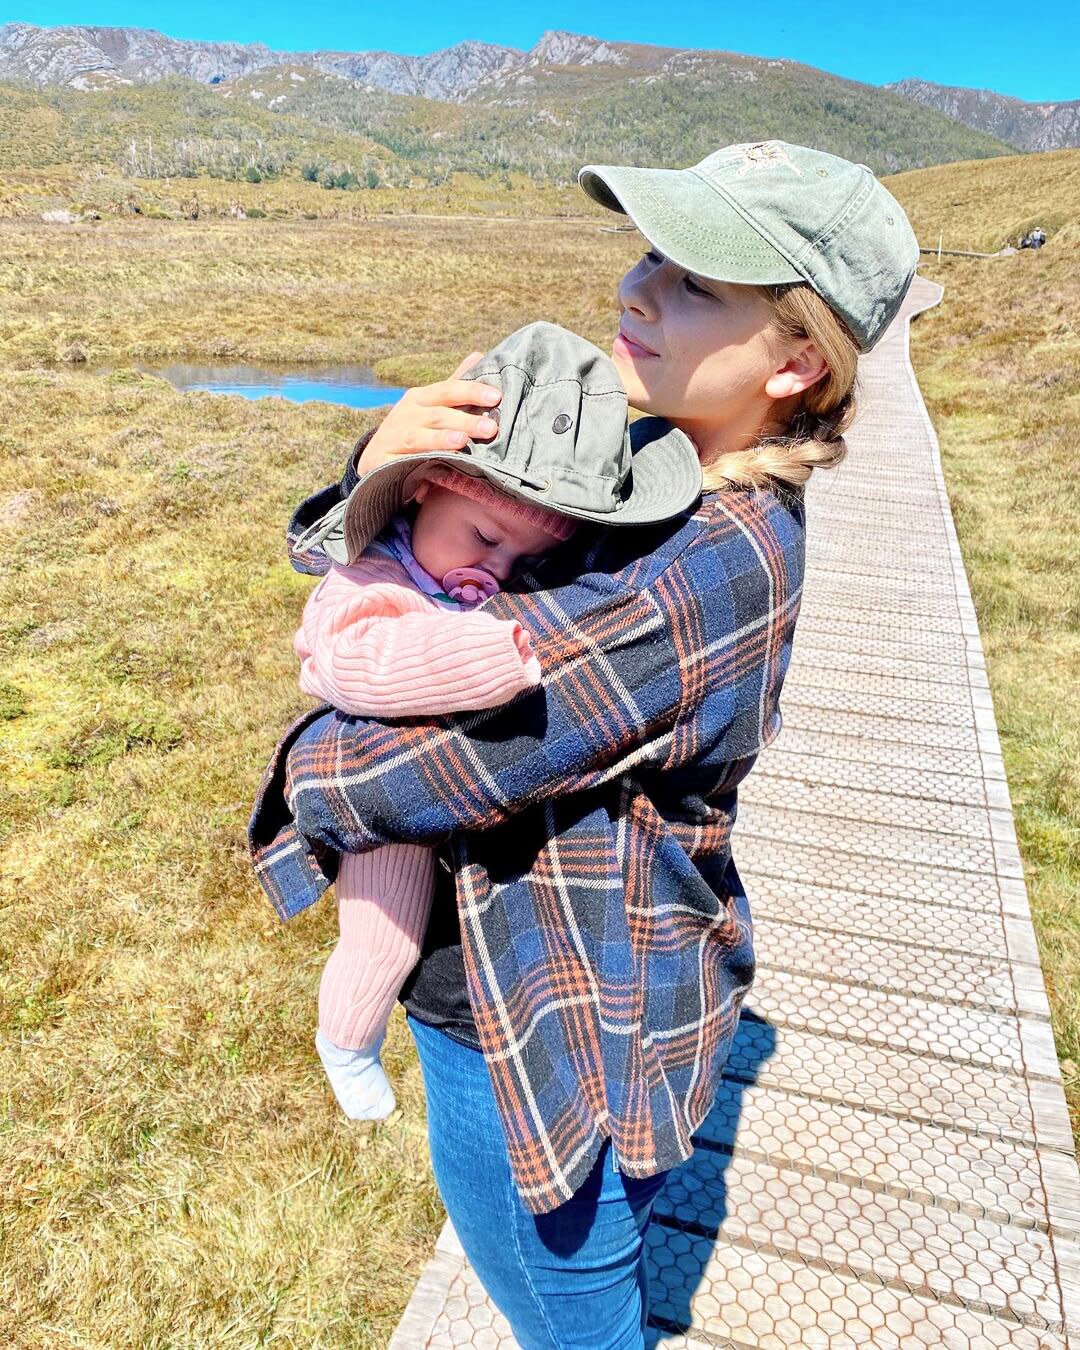 Irwins Take Baby Grace On Hiking 'Adventure'